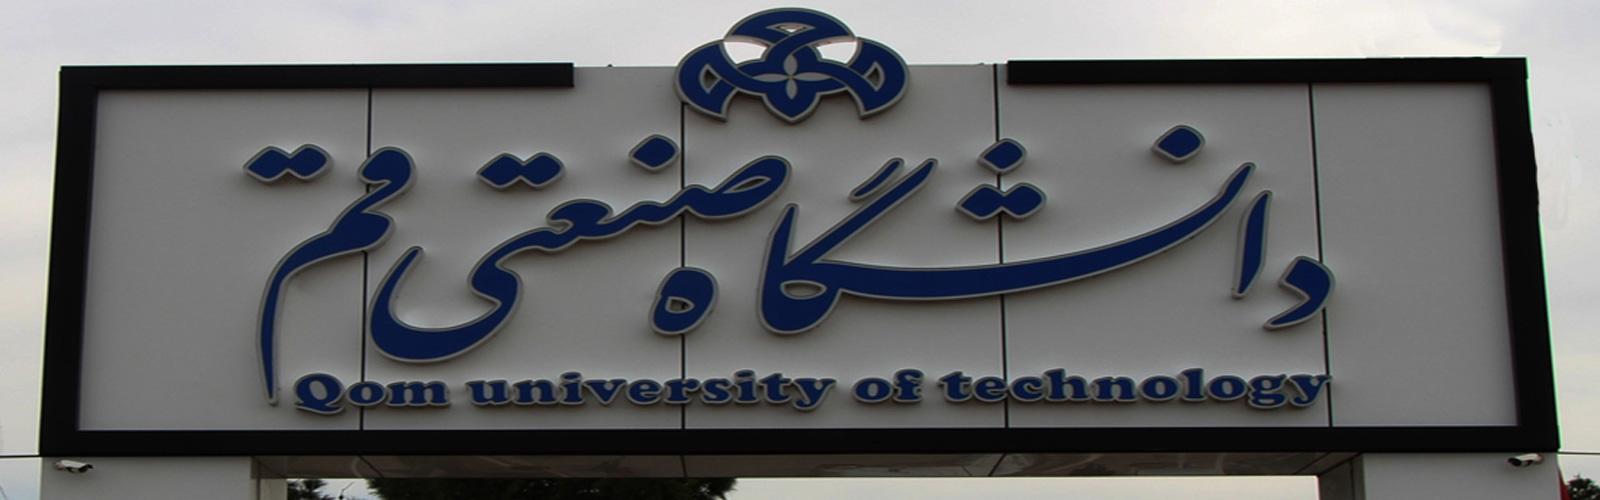 Qom University of Technology